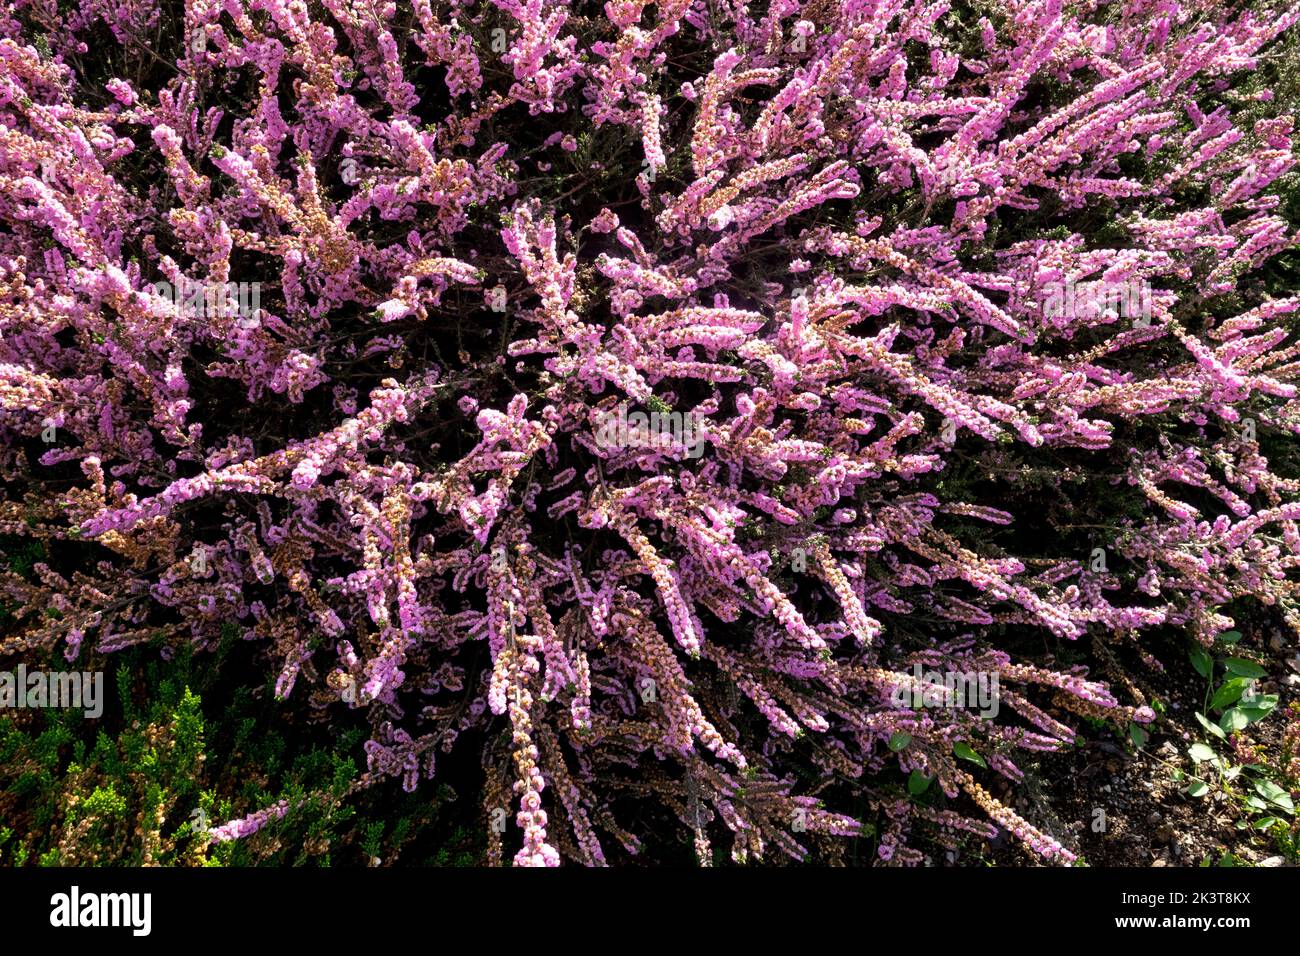 Pink Calluna heather 'Annemarie', Calluna vulgaris, Common Heather, Perennial Ling, Scotch Heather, Blooming Flowers Stock Photo